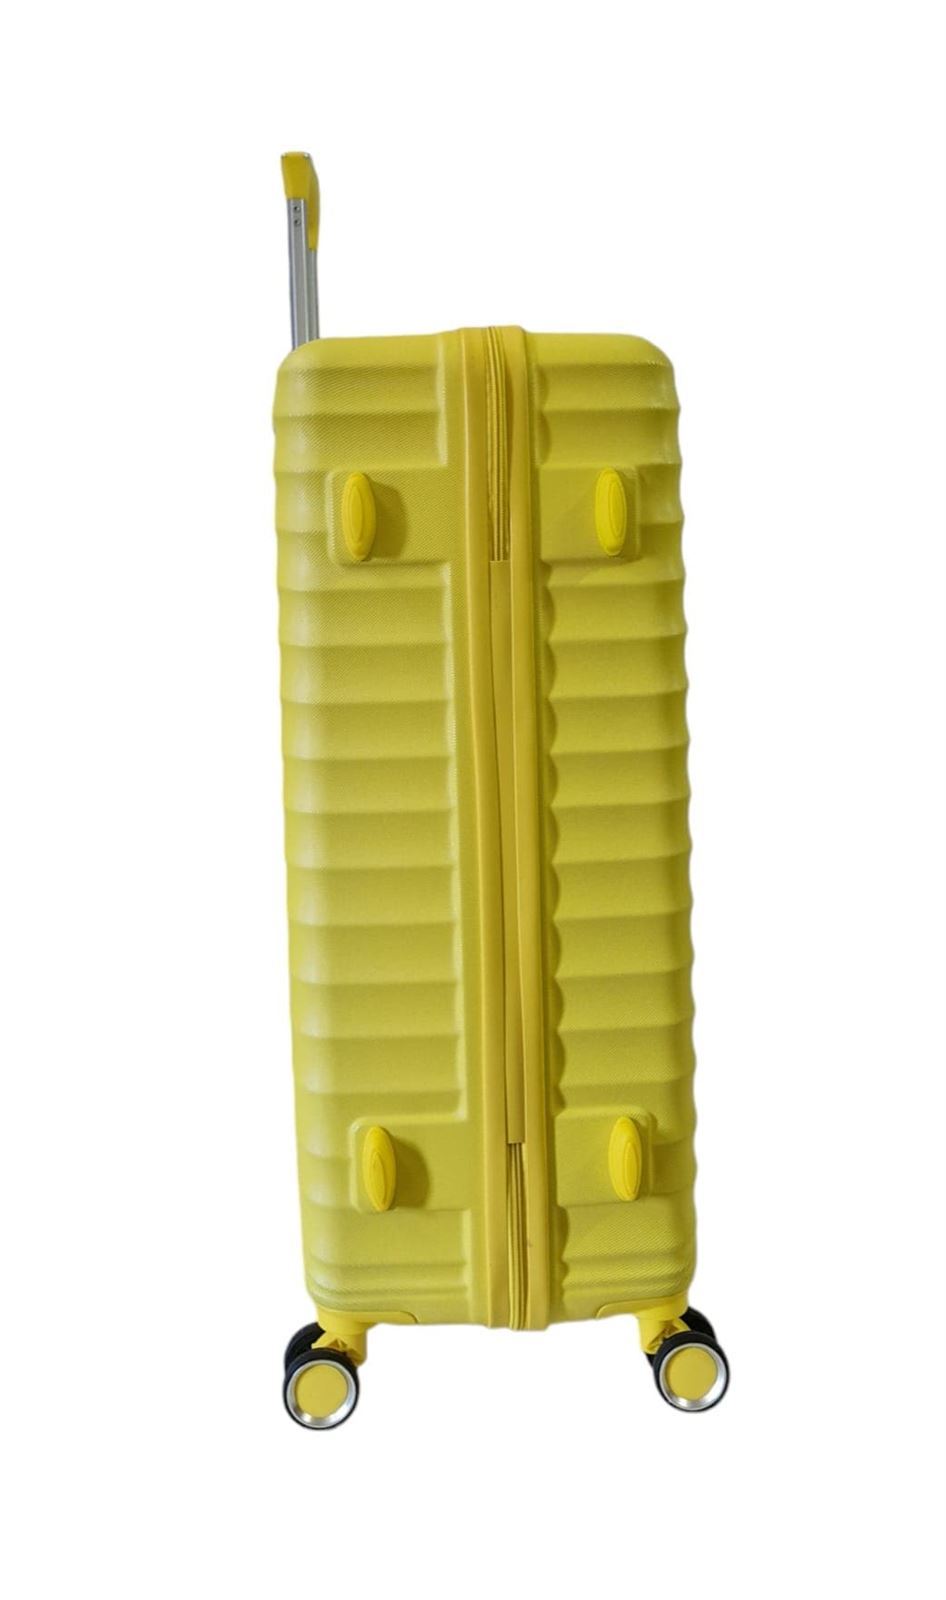 Maleta Grande Rigida Premium Muy Ligera Barata Material ABS Medidas 75x46x30 cms color Amarilla - Imagen 4